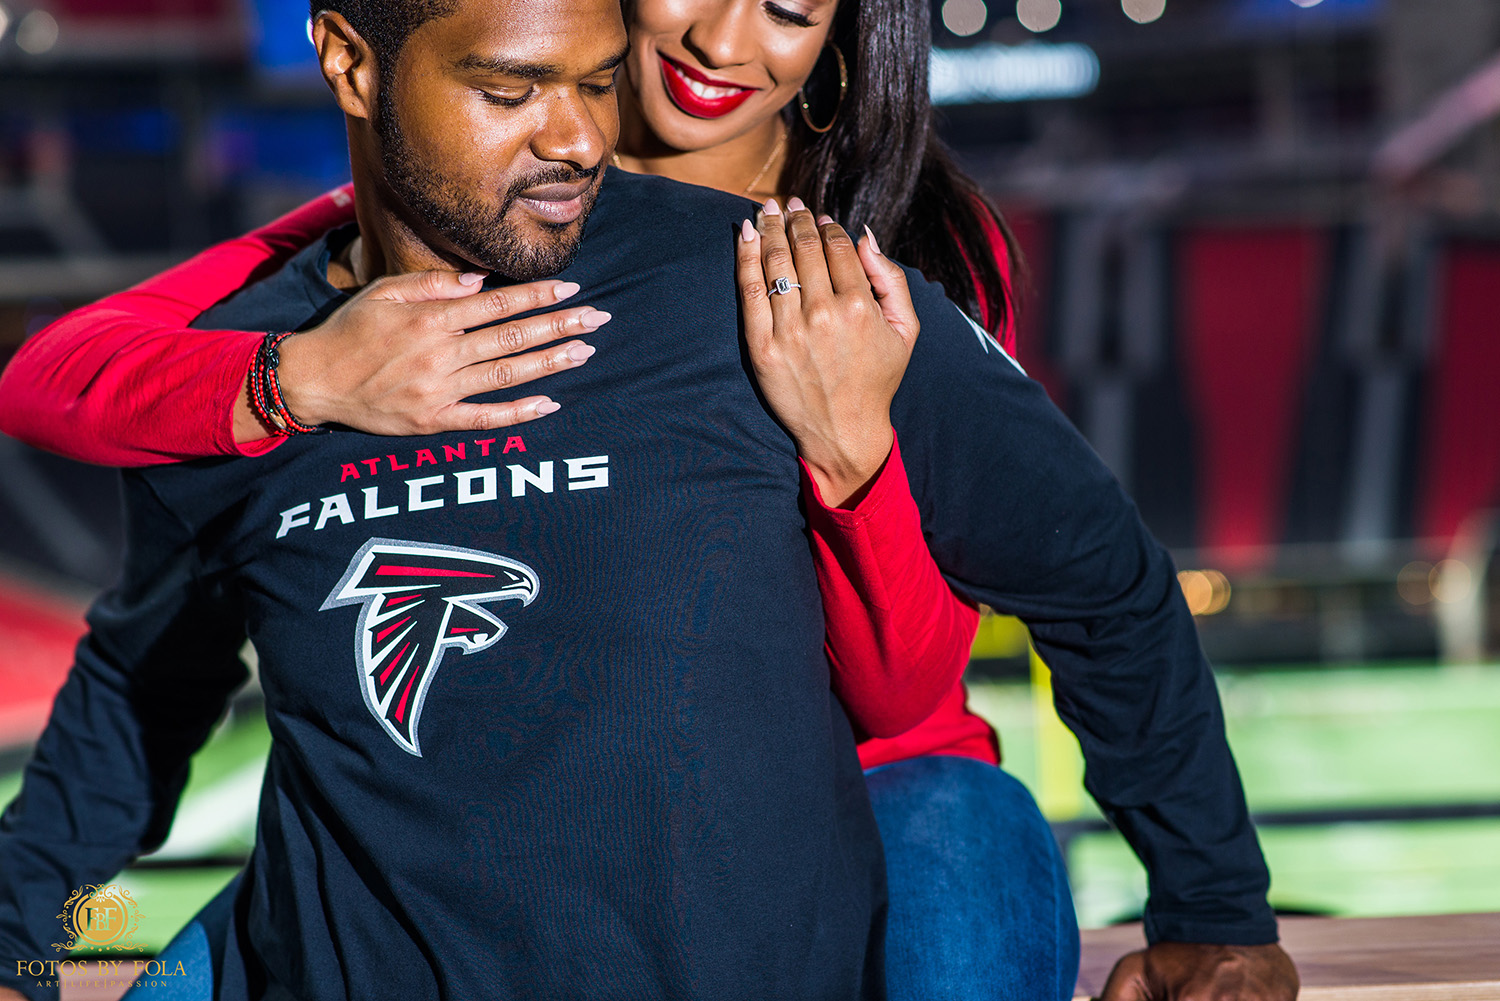 Fotos by Fola | Mercedes Benz Stadium | Atlanta Falcons | Engagement Shoot | Atlanta Wedding Photographer